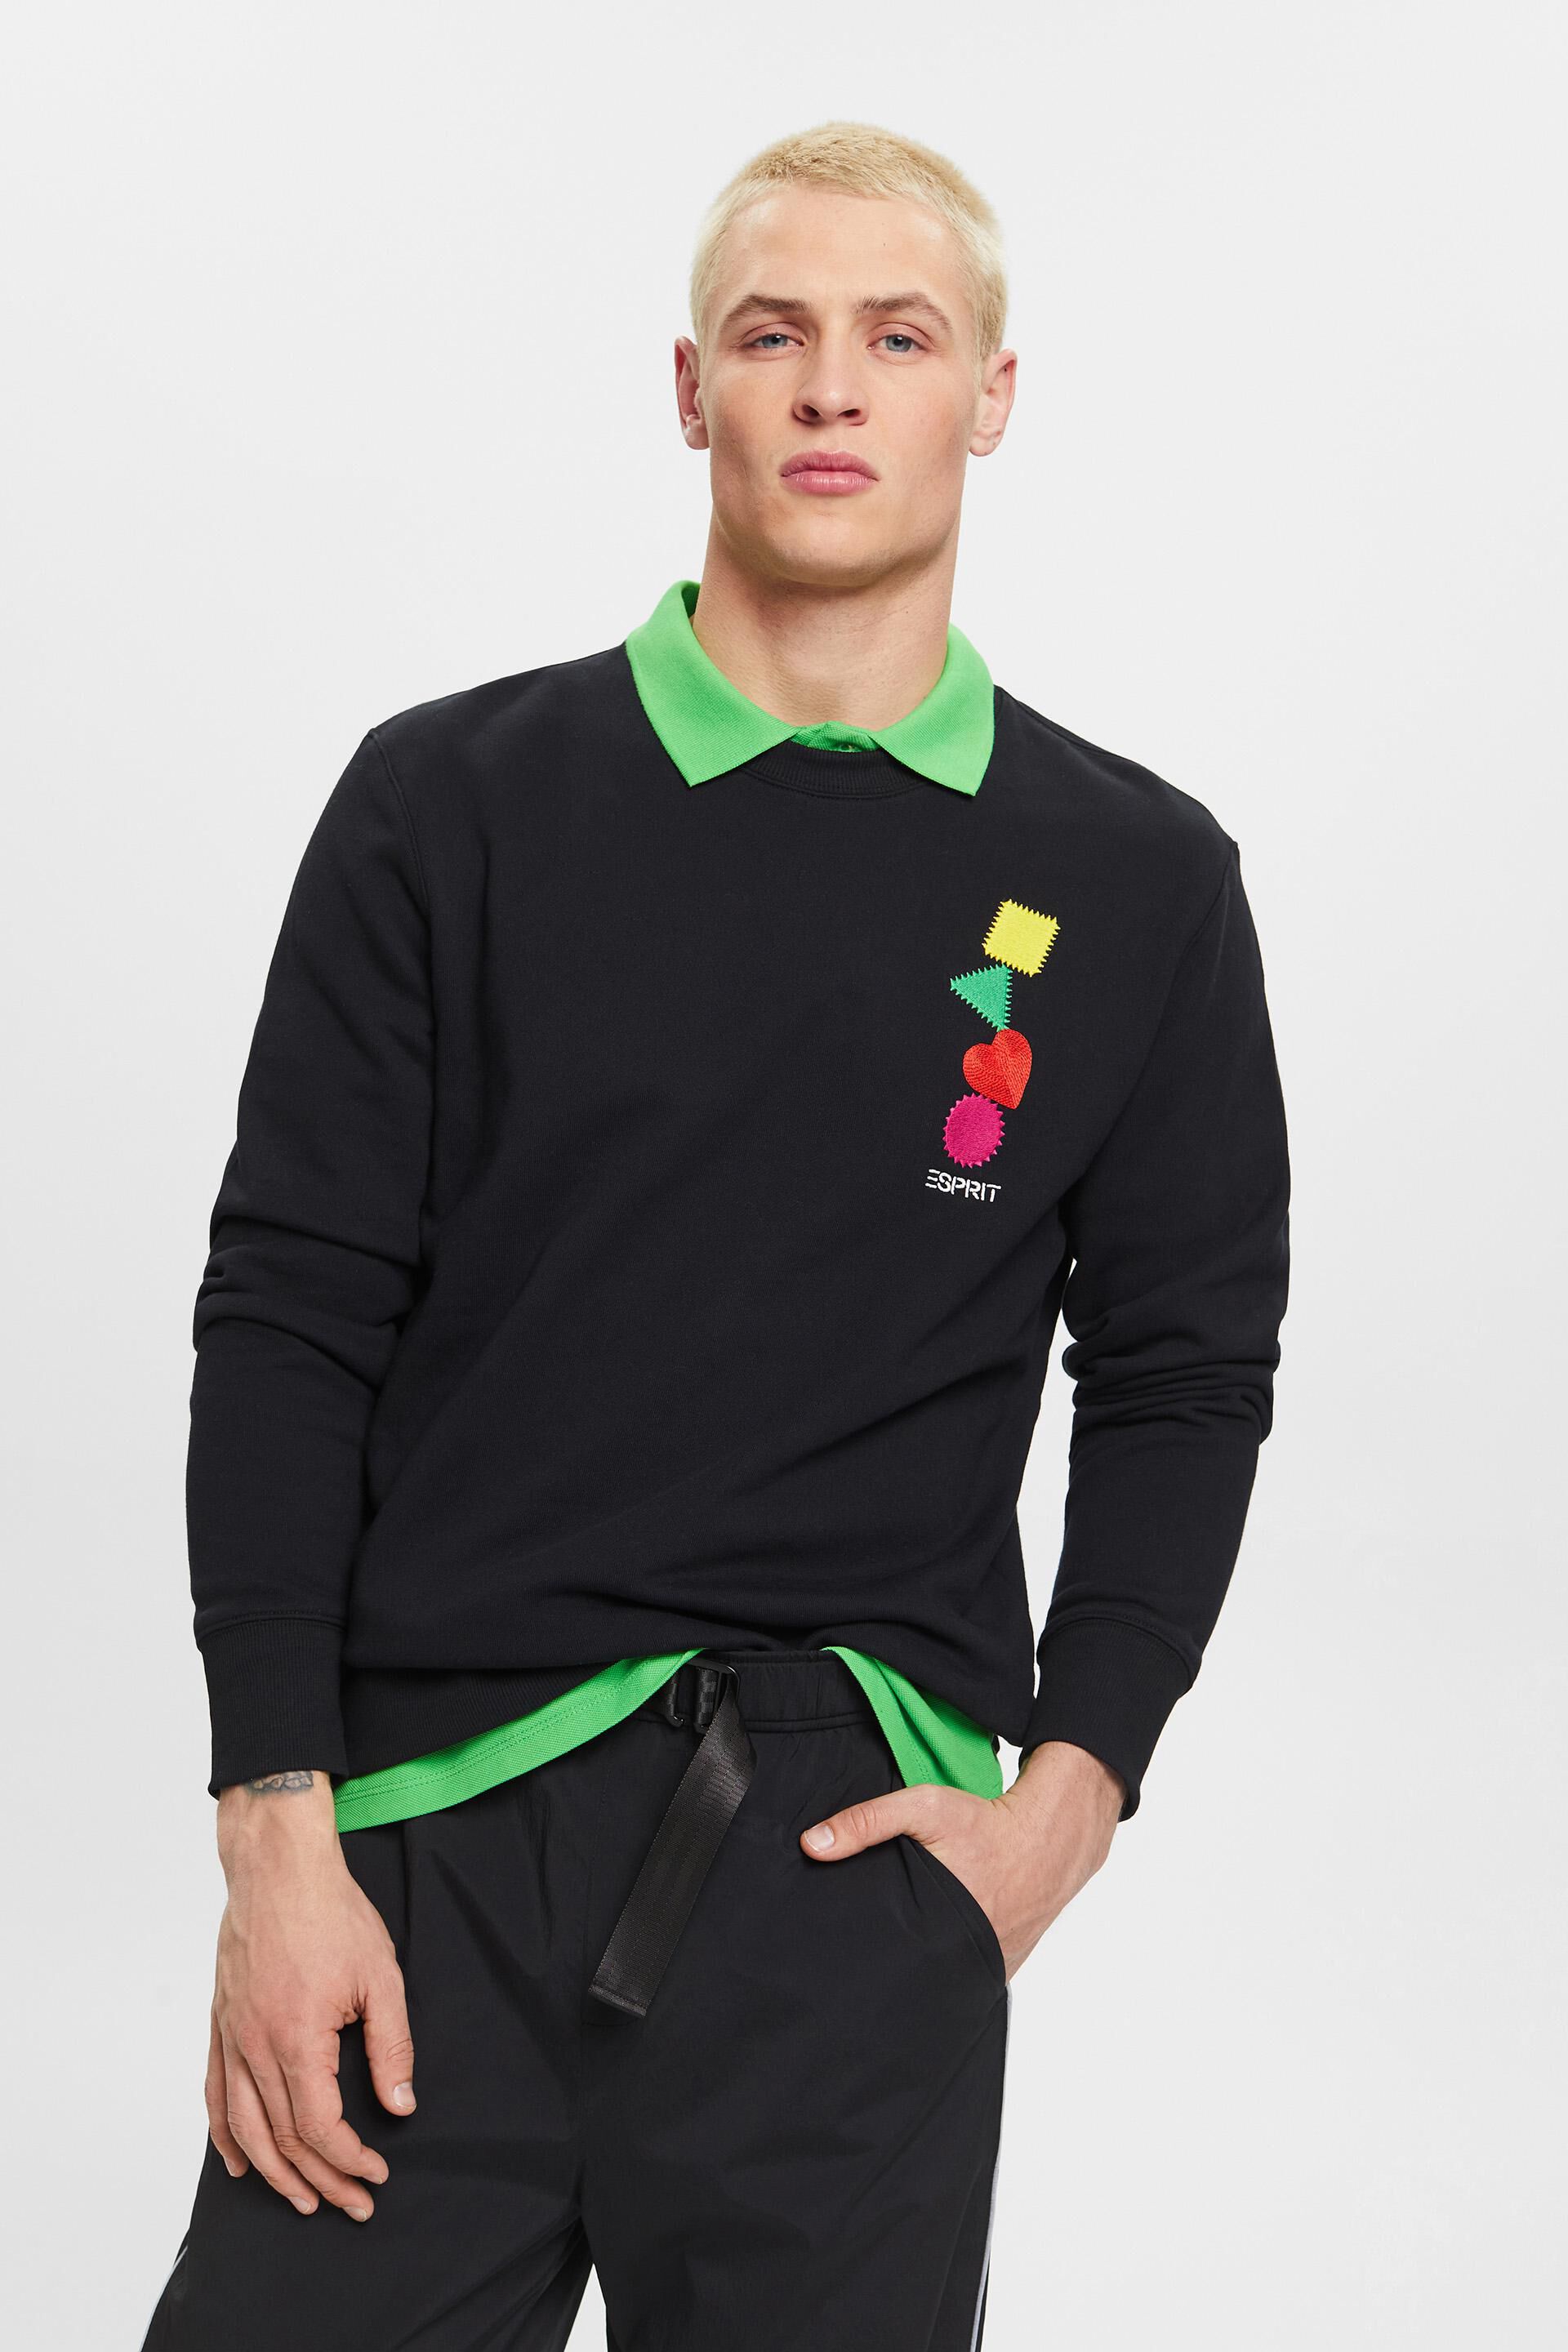 Esprit motif Sweatshirt geometric with heart embroidered